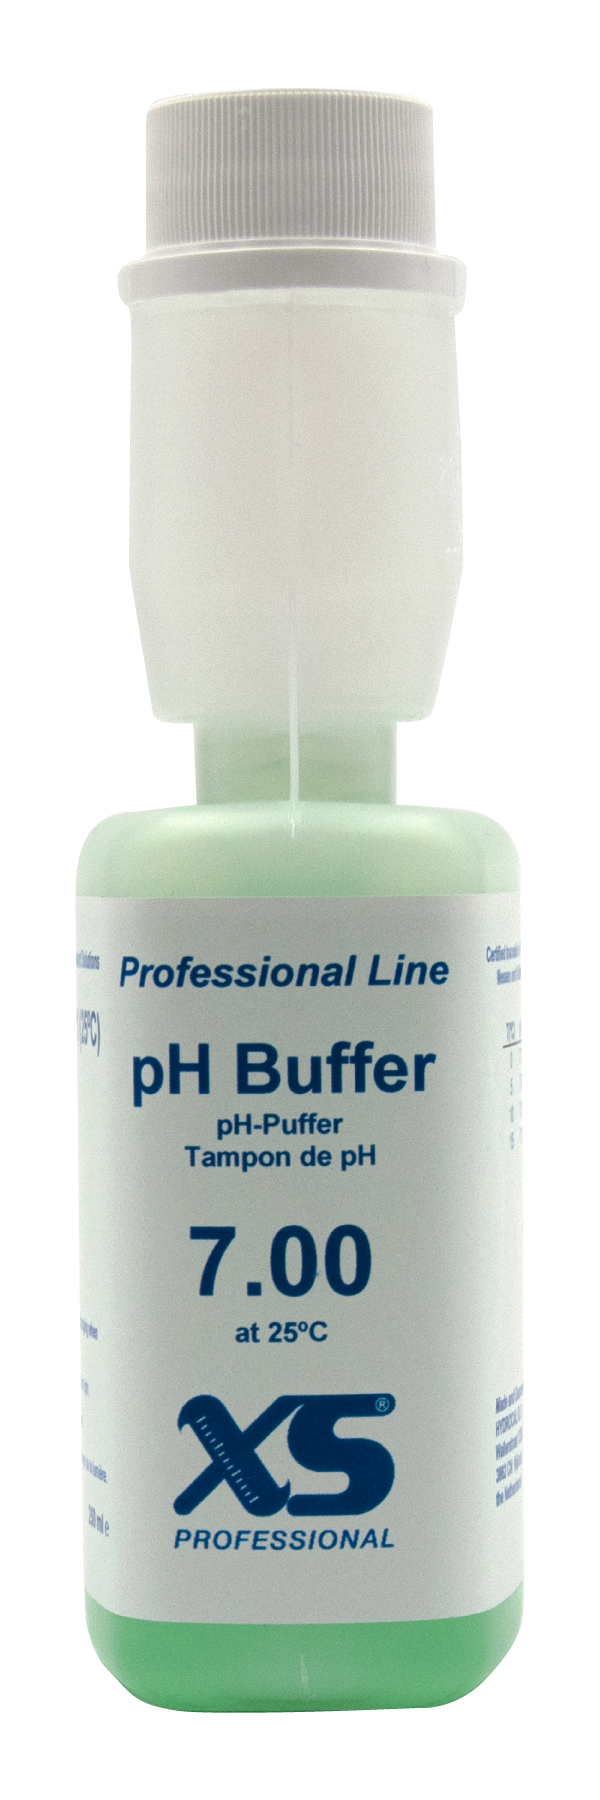 XS Professional pH 7.00 (±0,01pH @25°C) - 250ml pH Pufferlösung mit DAkkS Zertifikat